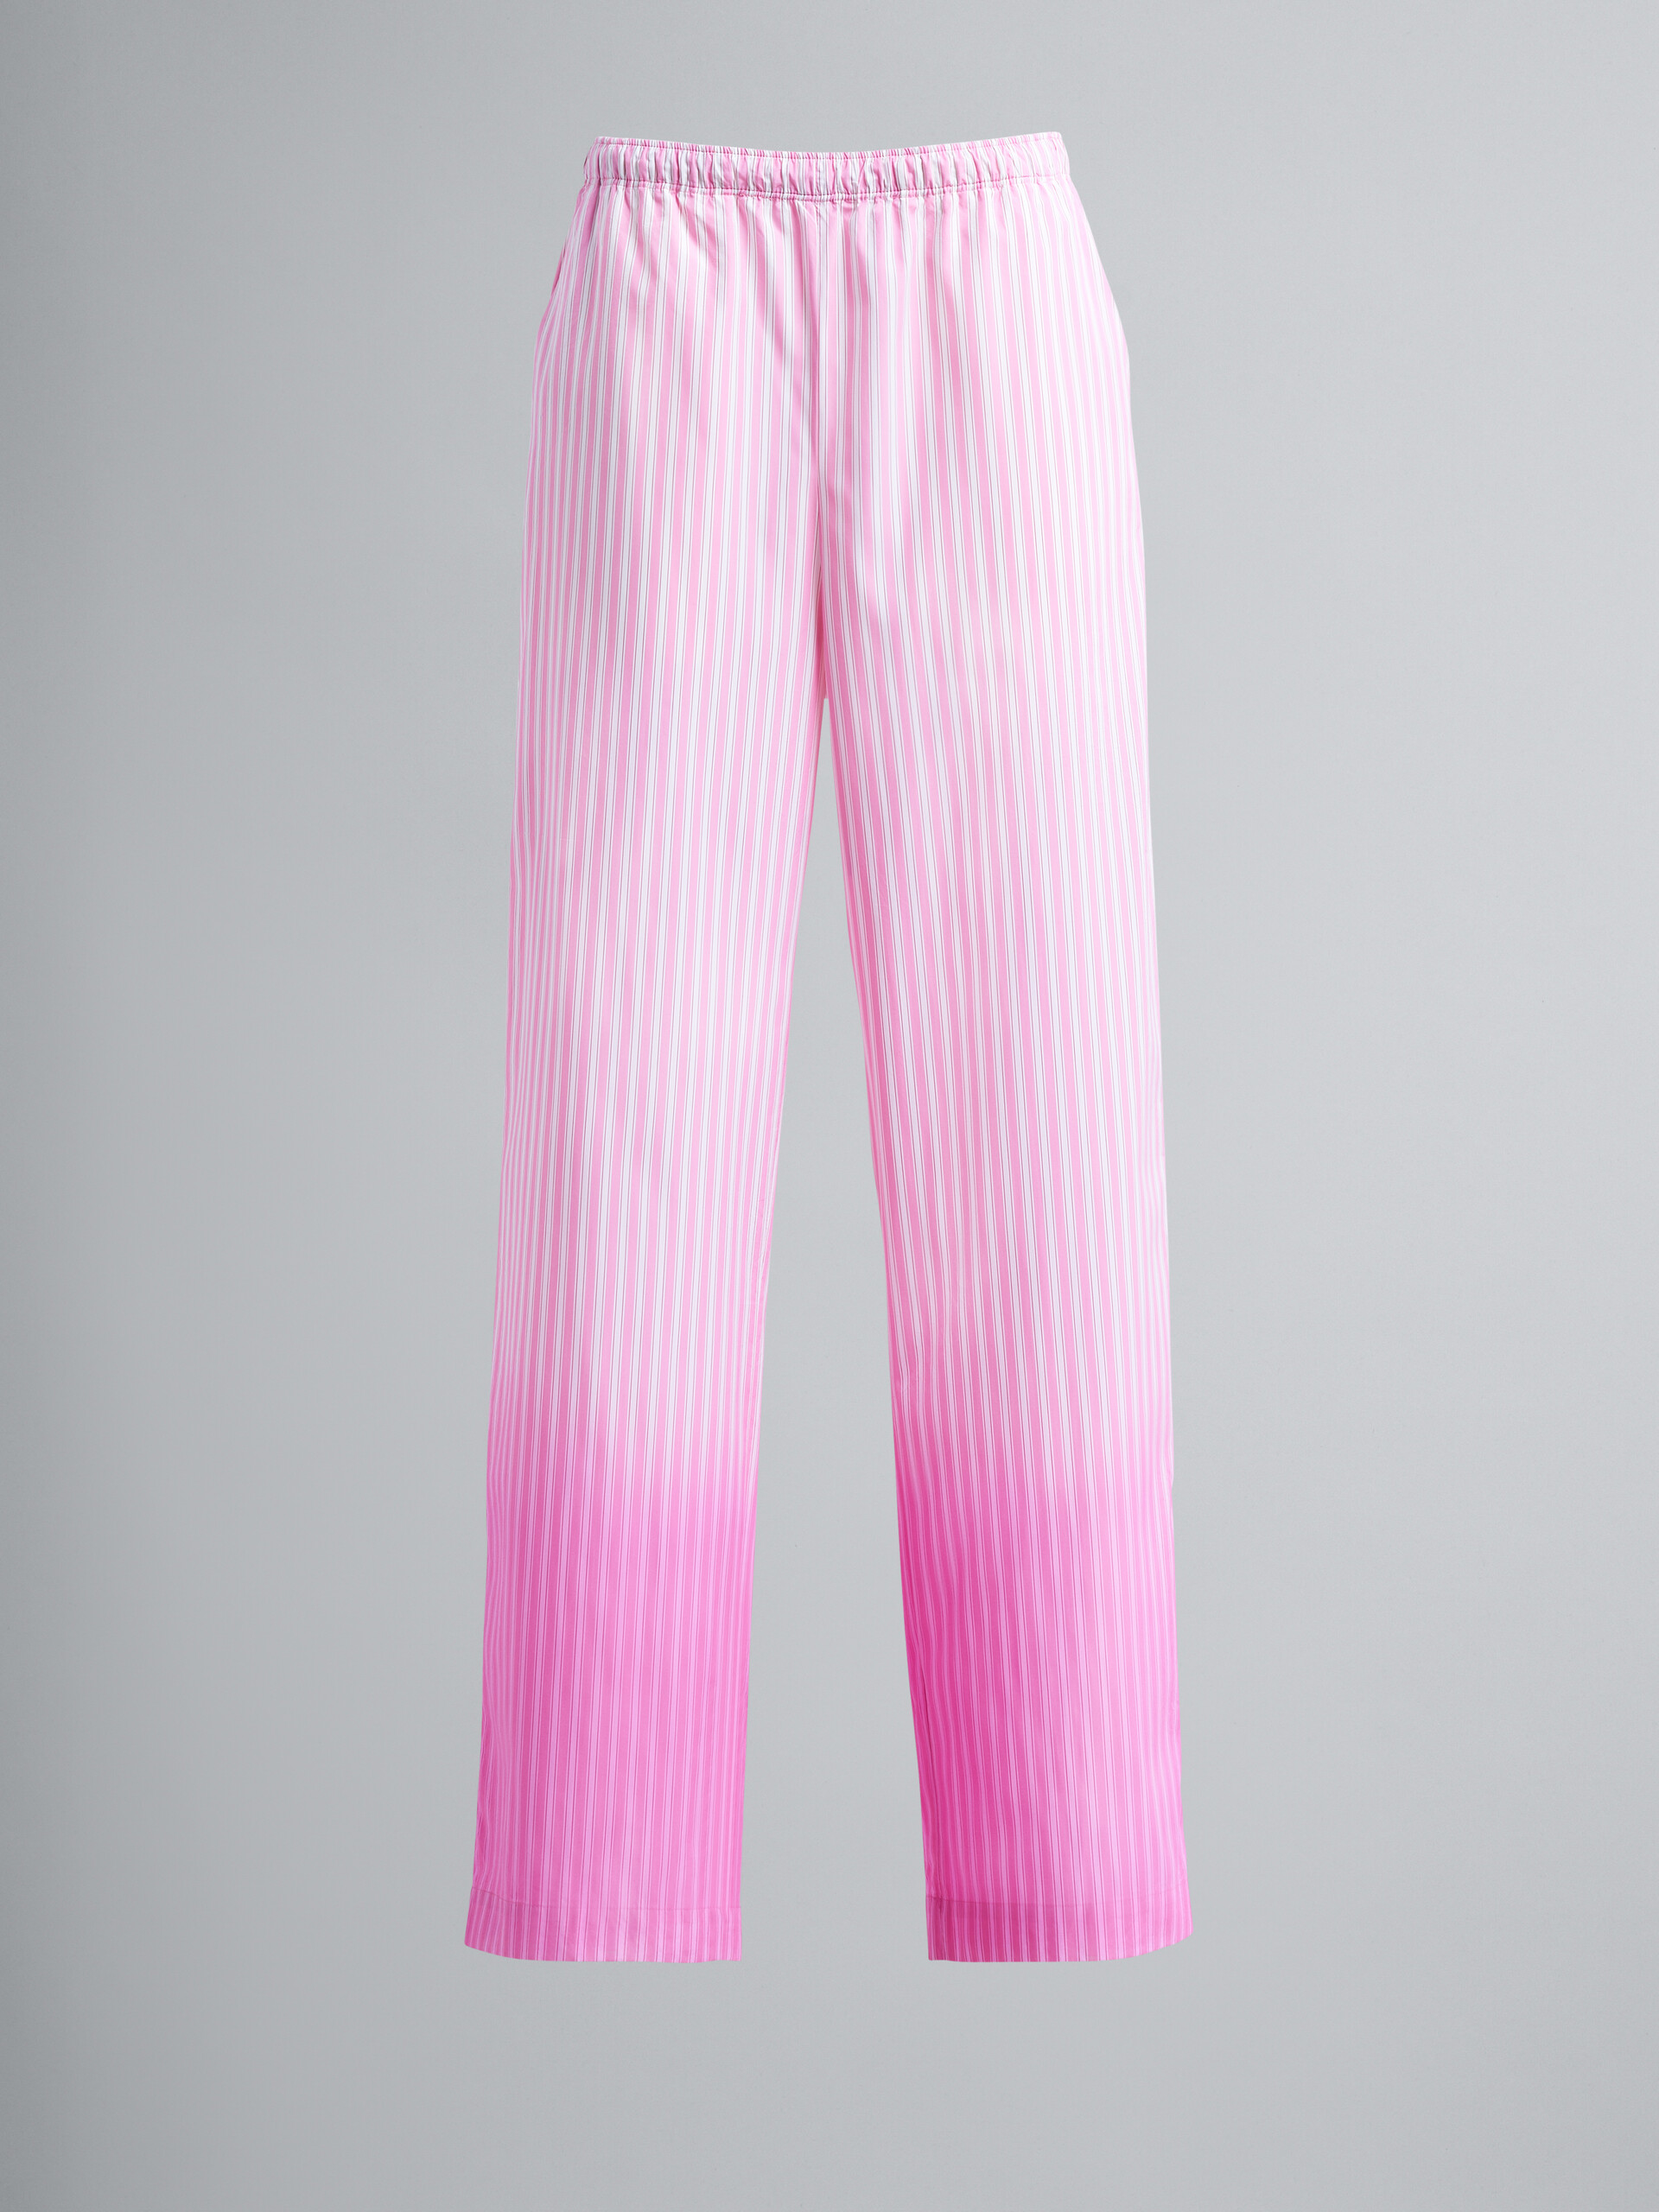 Pink dip-dyed poplin trousers - Pants - Image 1